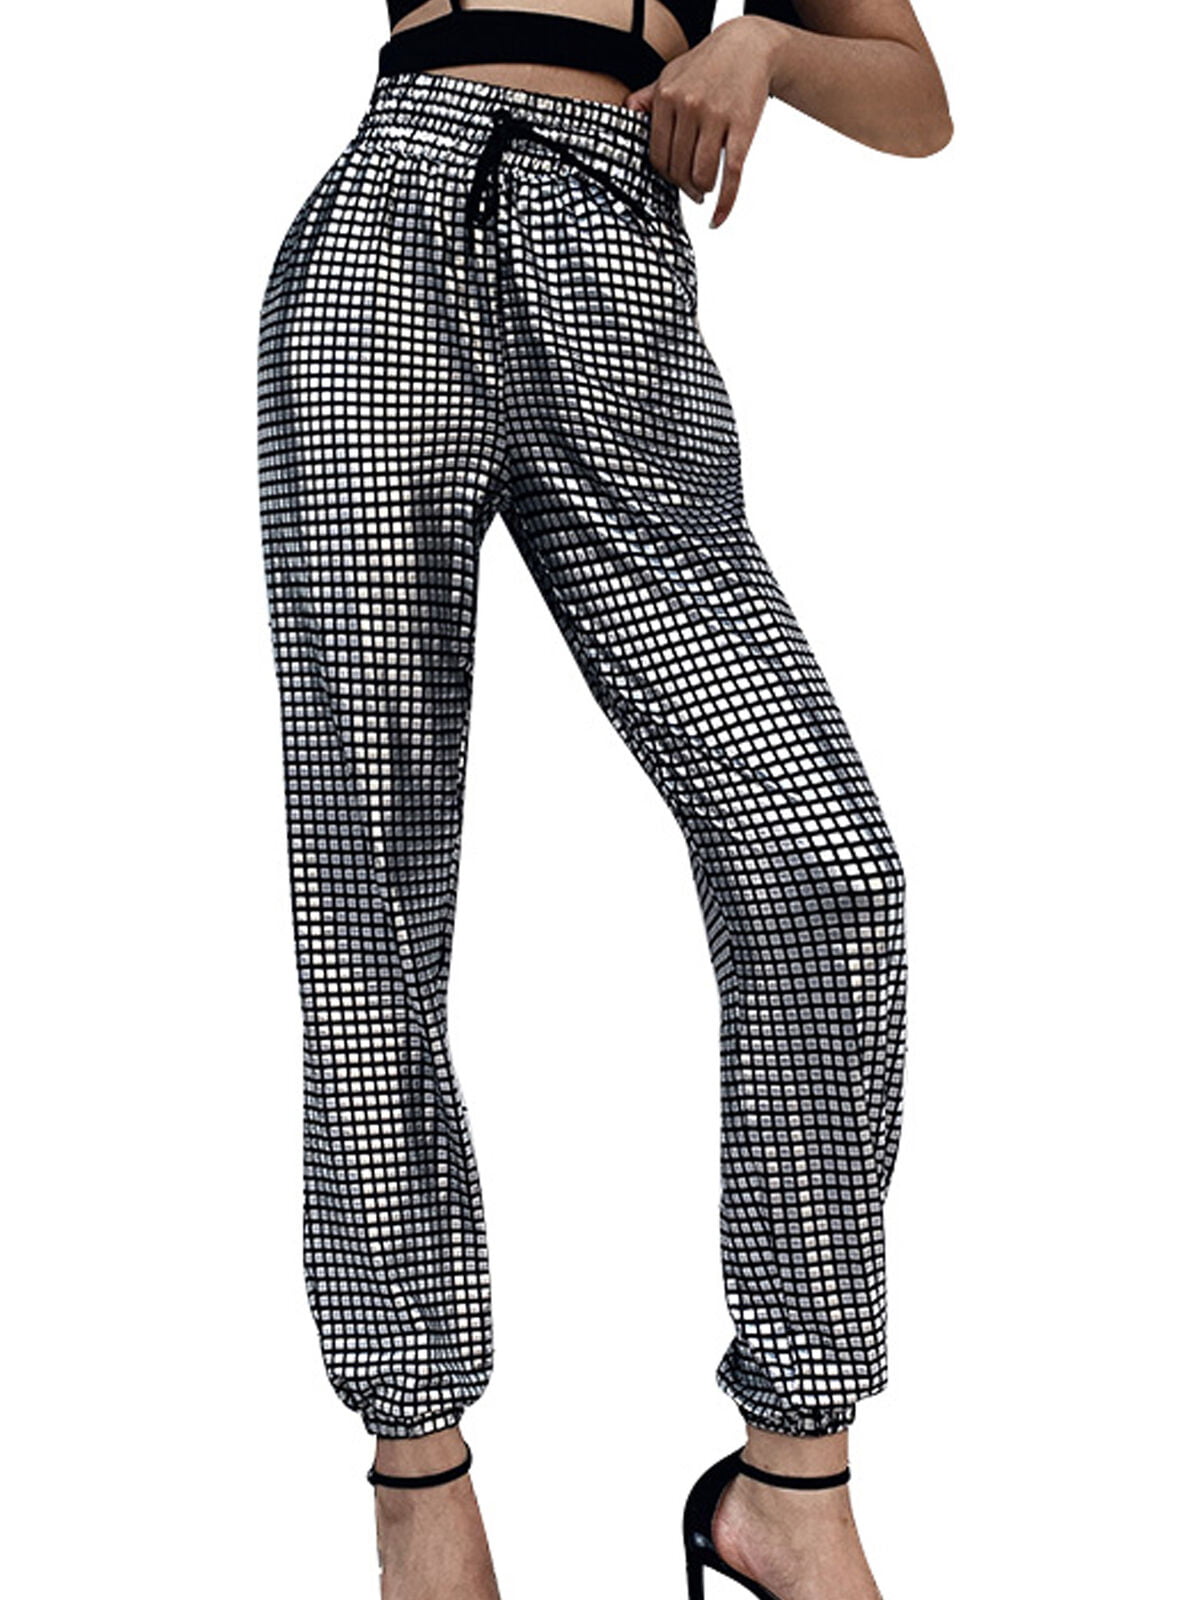 Women Black+White Check Casual Pants Checkerboard Sport Dance Jogger Trousers 